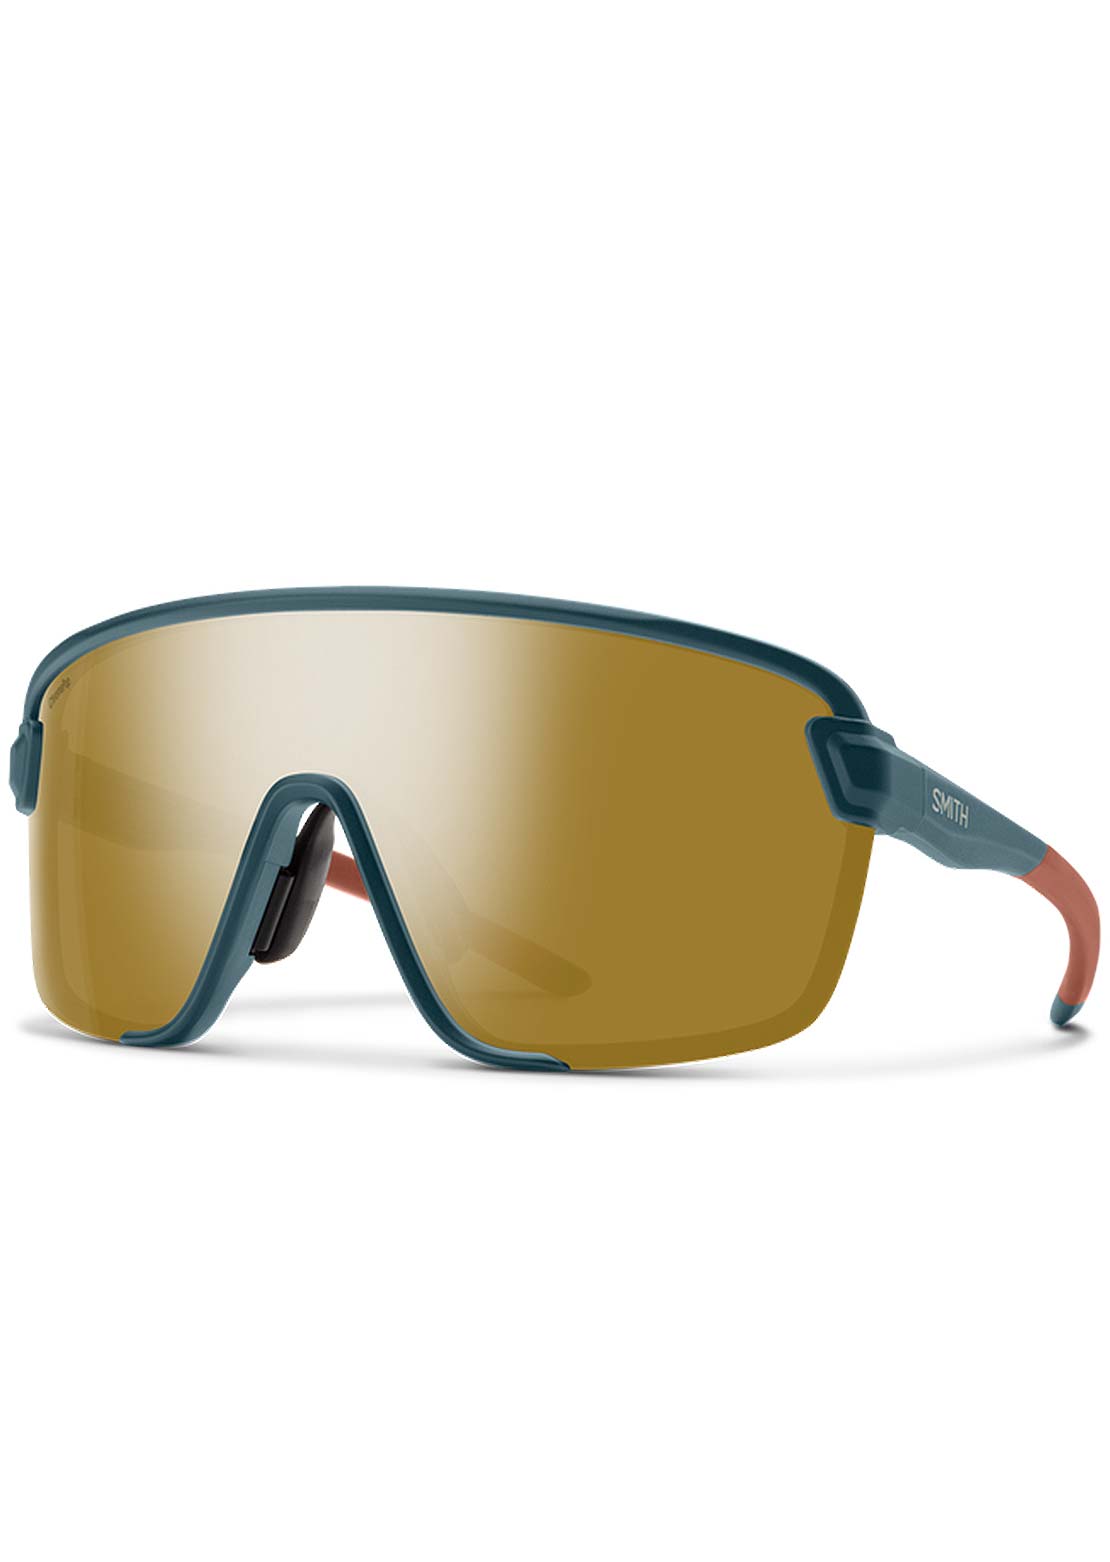 Smith Bobcat Mountain Bike Sunglasses Matte Pacific/Sedona/Chromapop Bronze Mirror